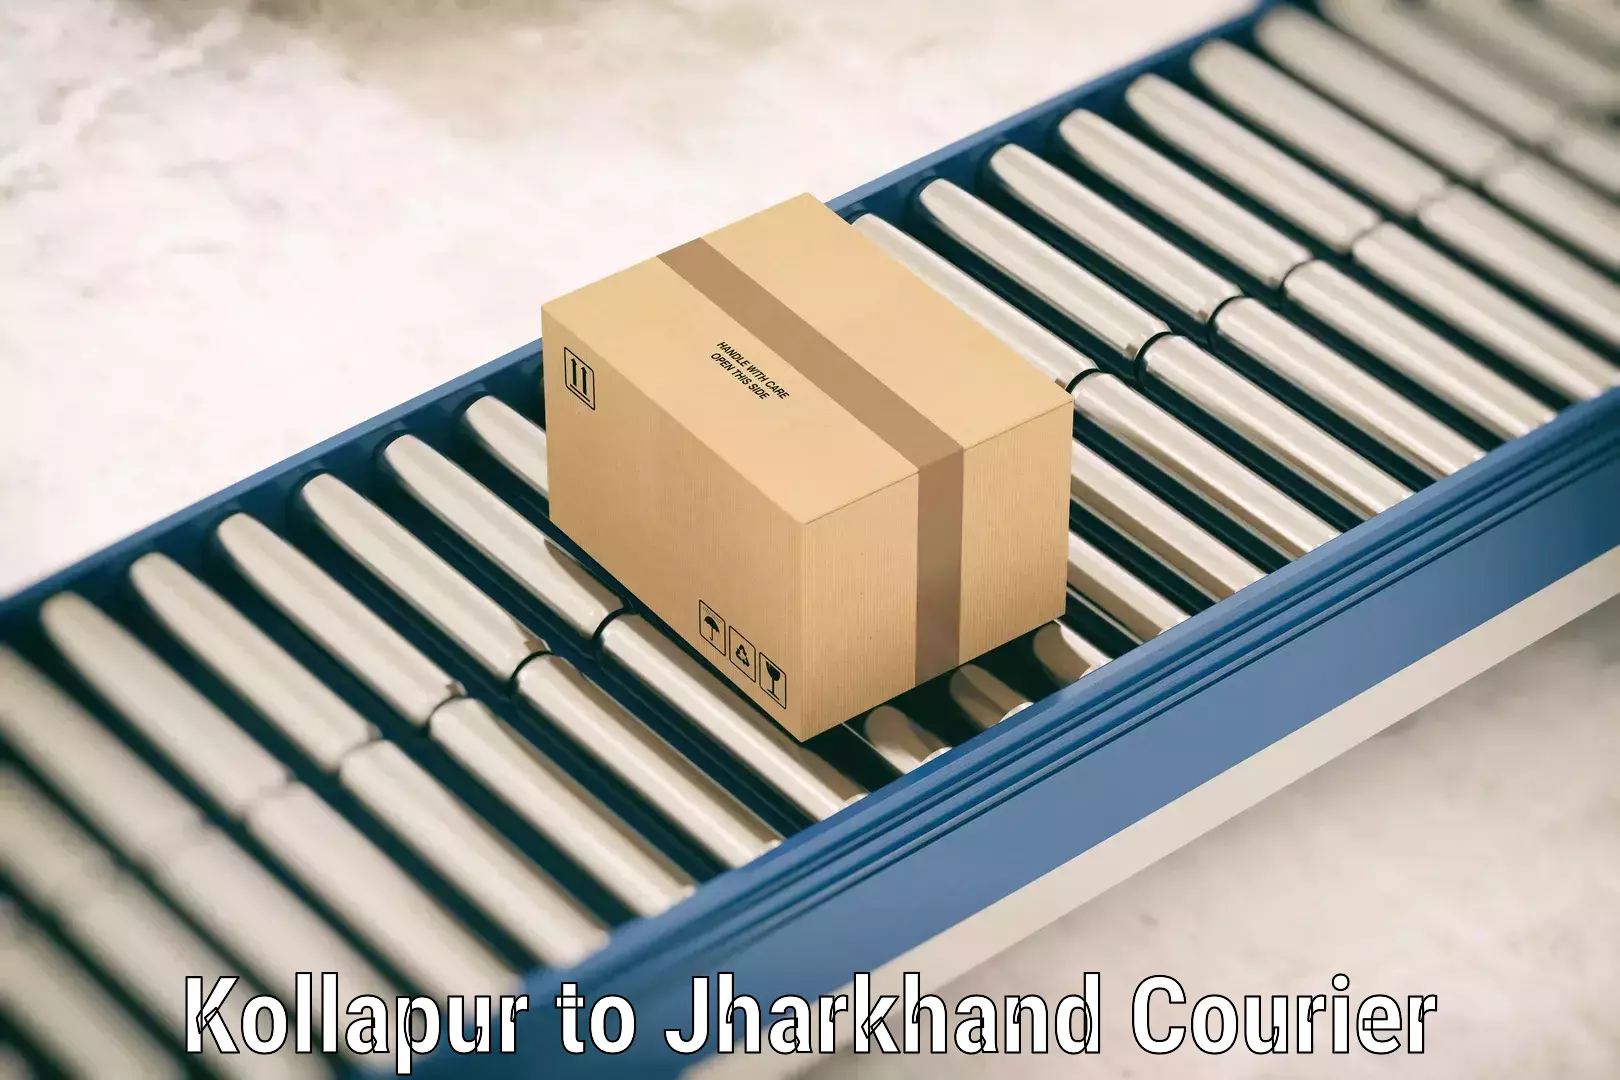 Urgent luggage shipment in Kollapur to Giridih